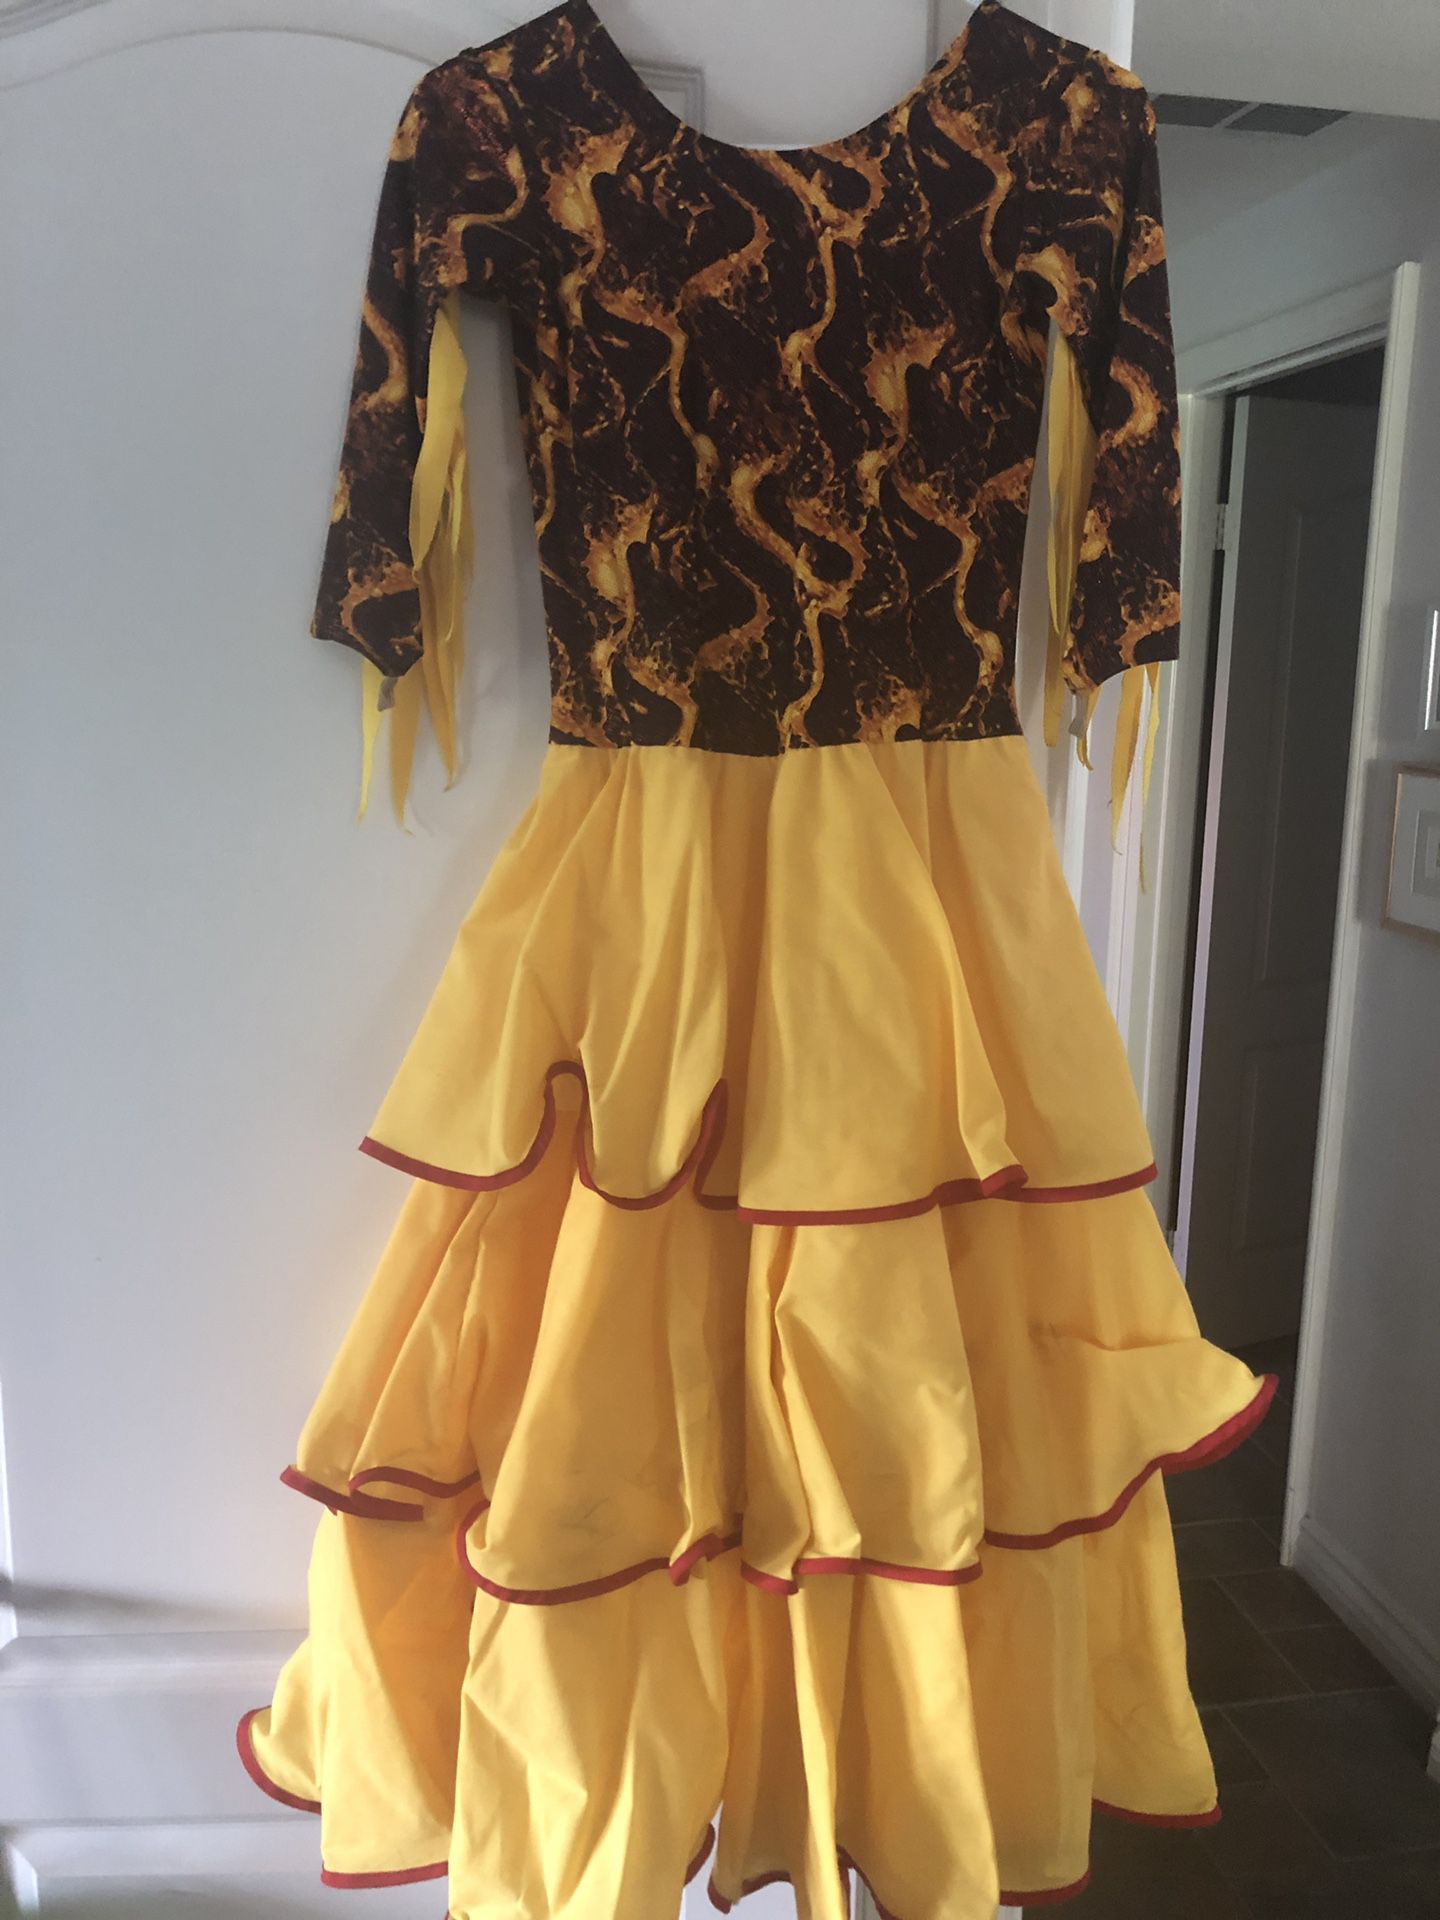 Halloween costume - flamenco - $8. size 5-8 girls